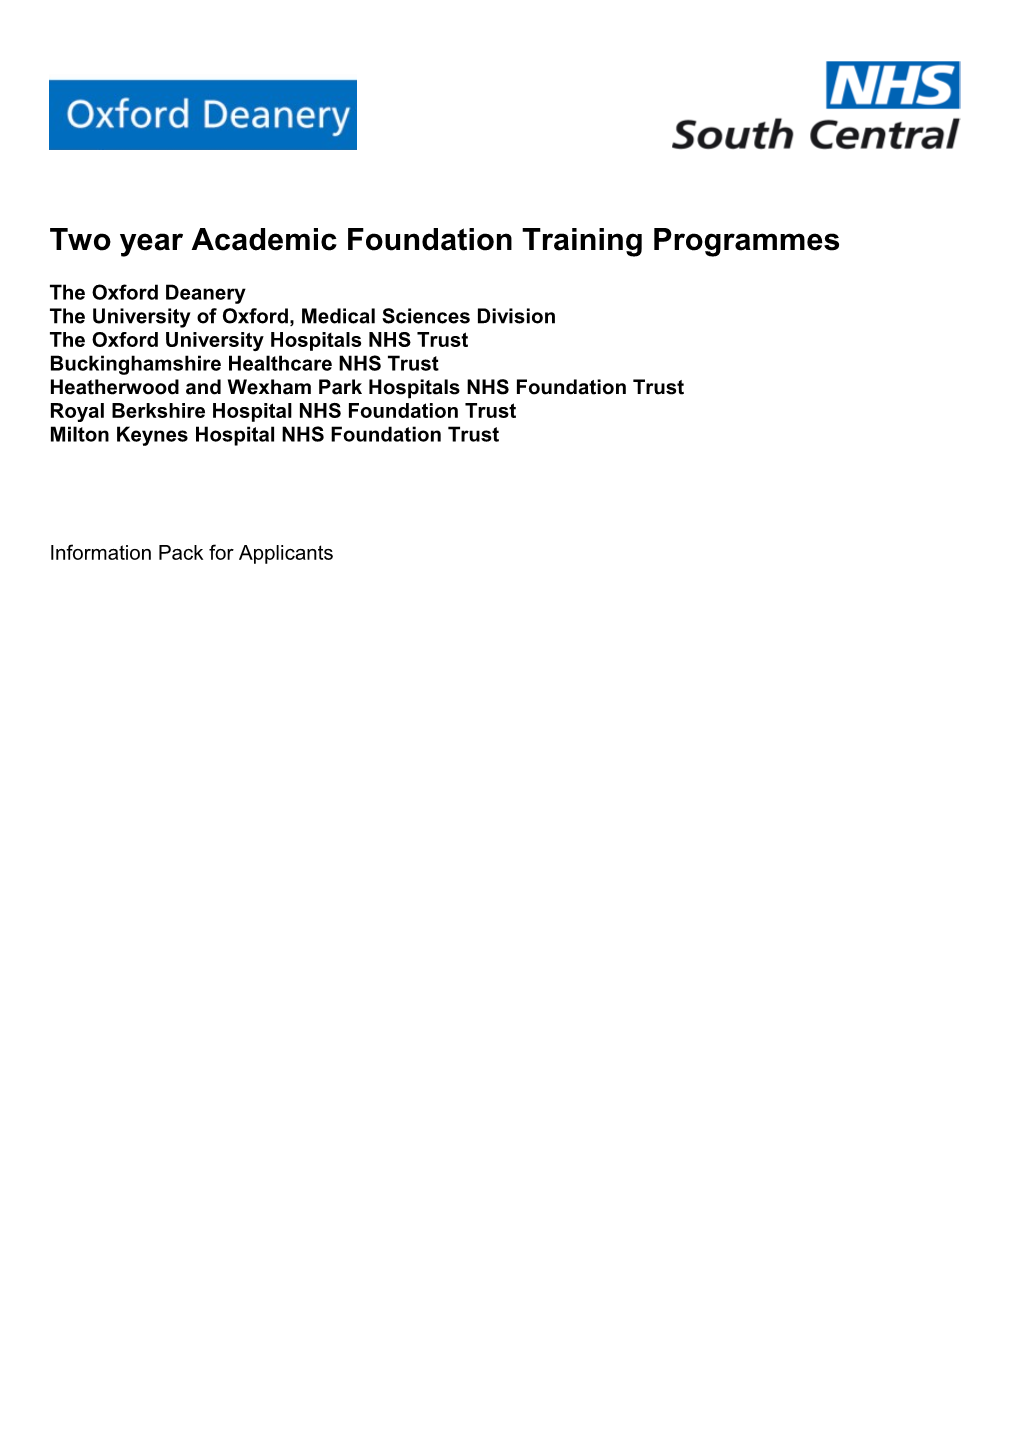 Two Year Academic Foundation Training Programmes s1